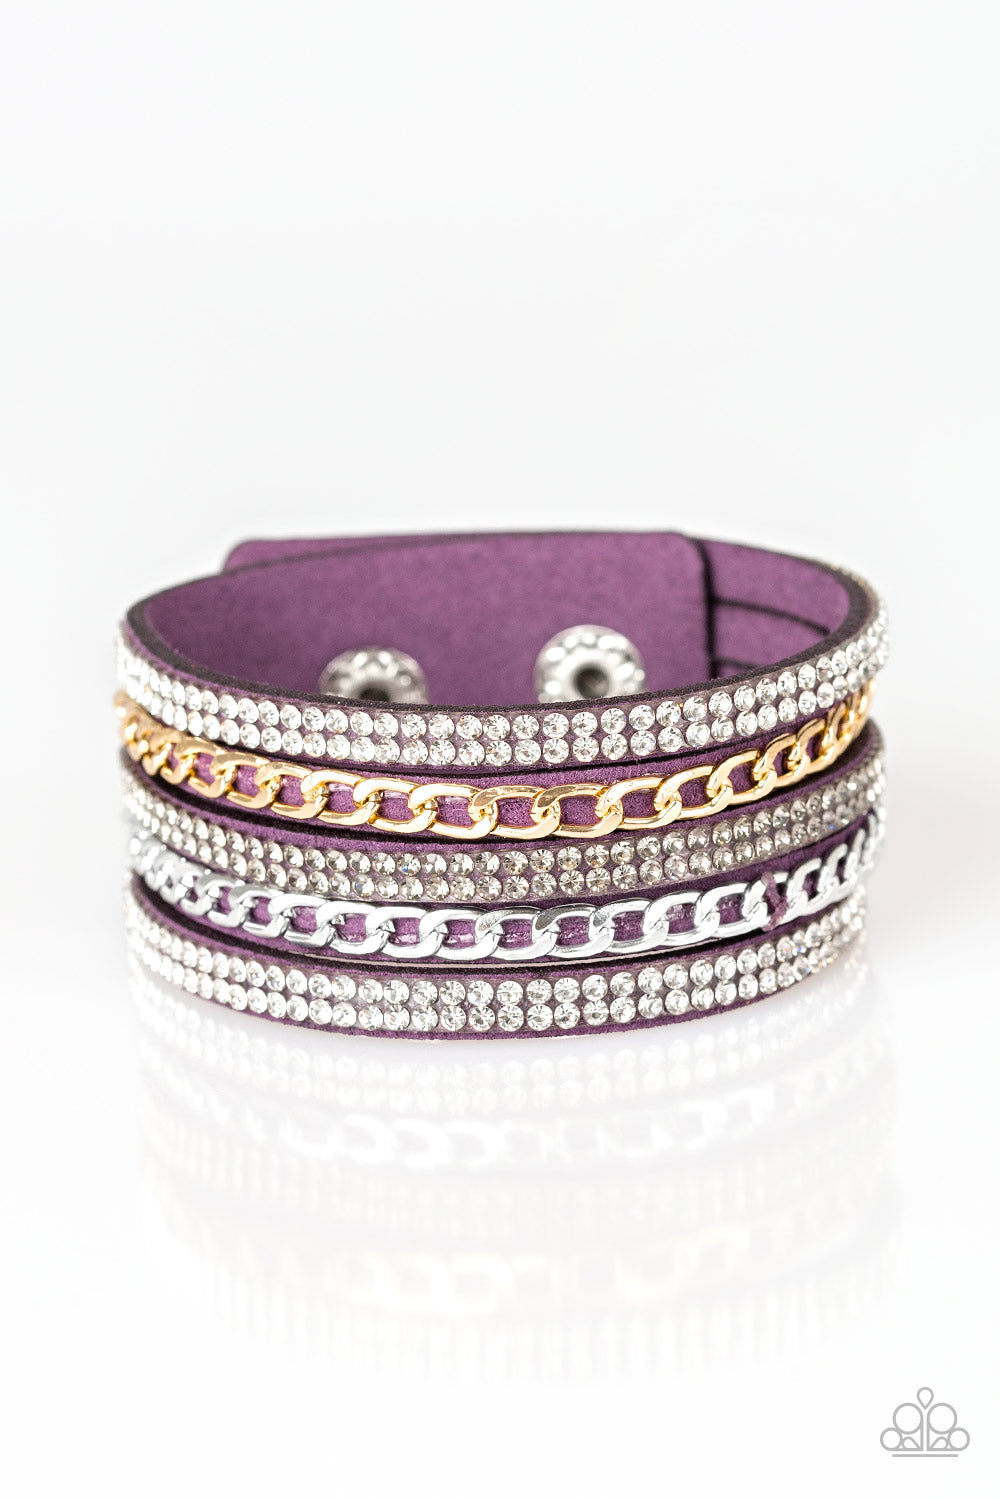 pittmanbling-and-jewelry-inc-presentsfashion-fiend-purple-bracelet-paparazzi-accessories